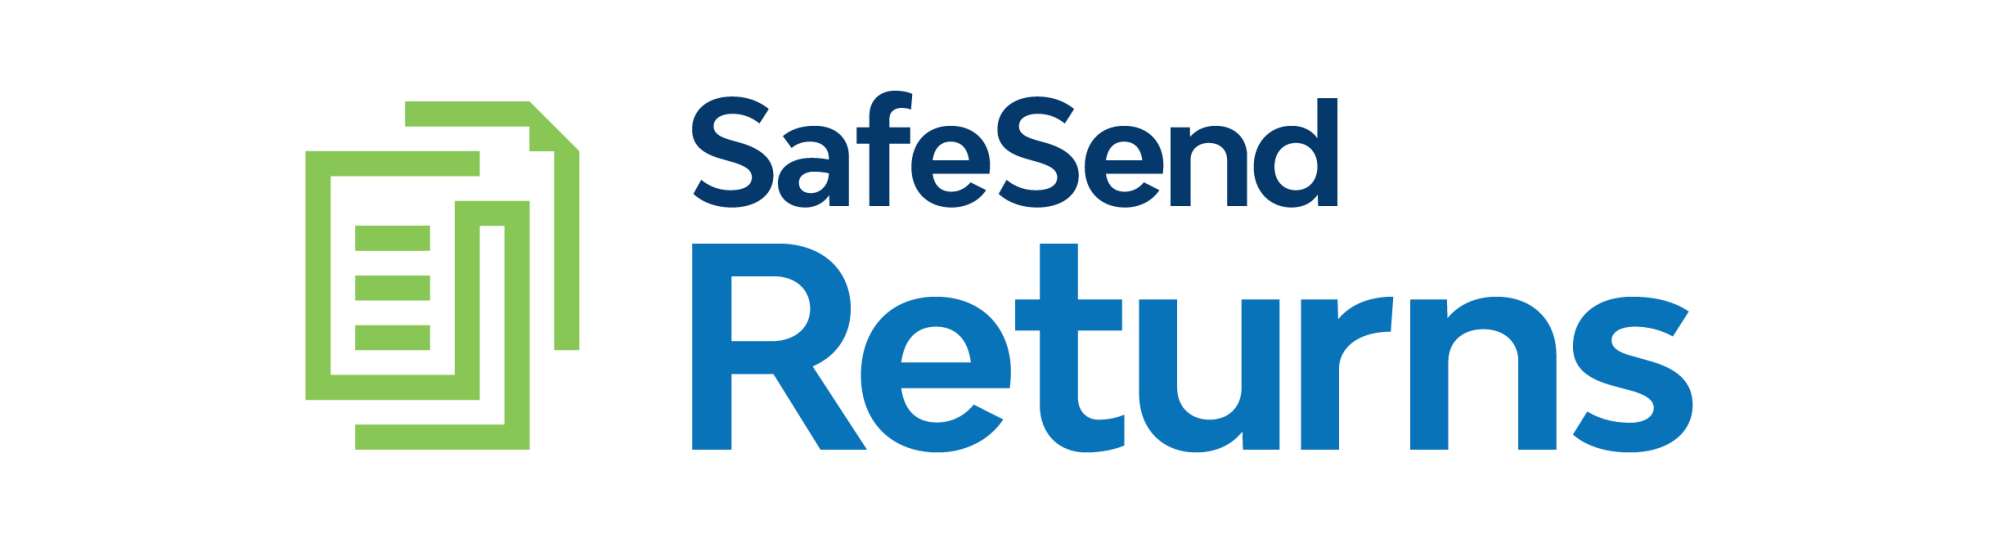 safesend returns logo